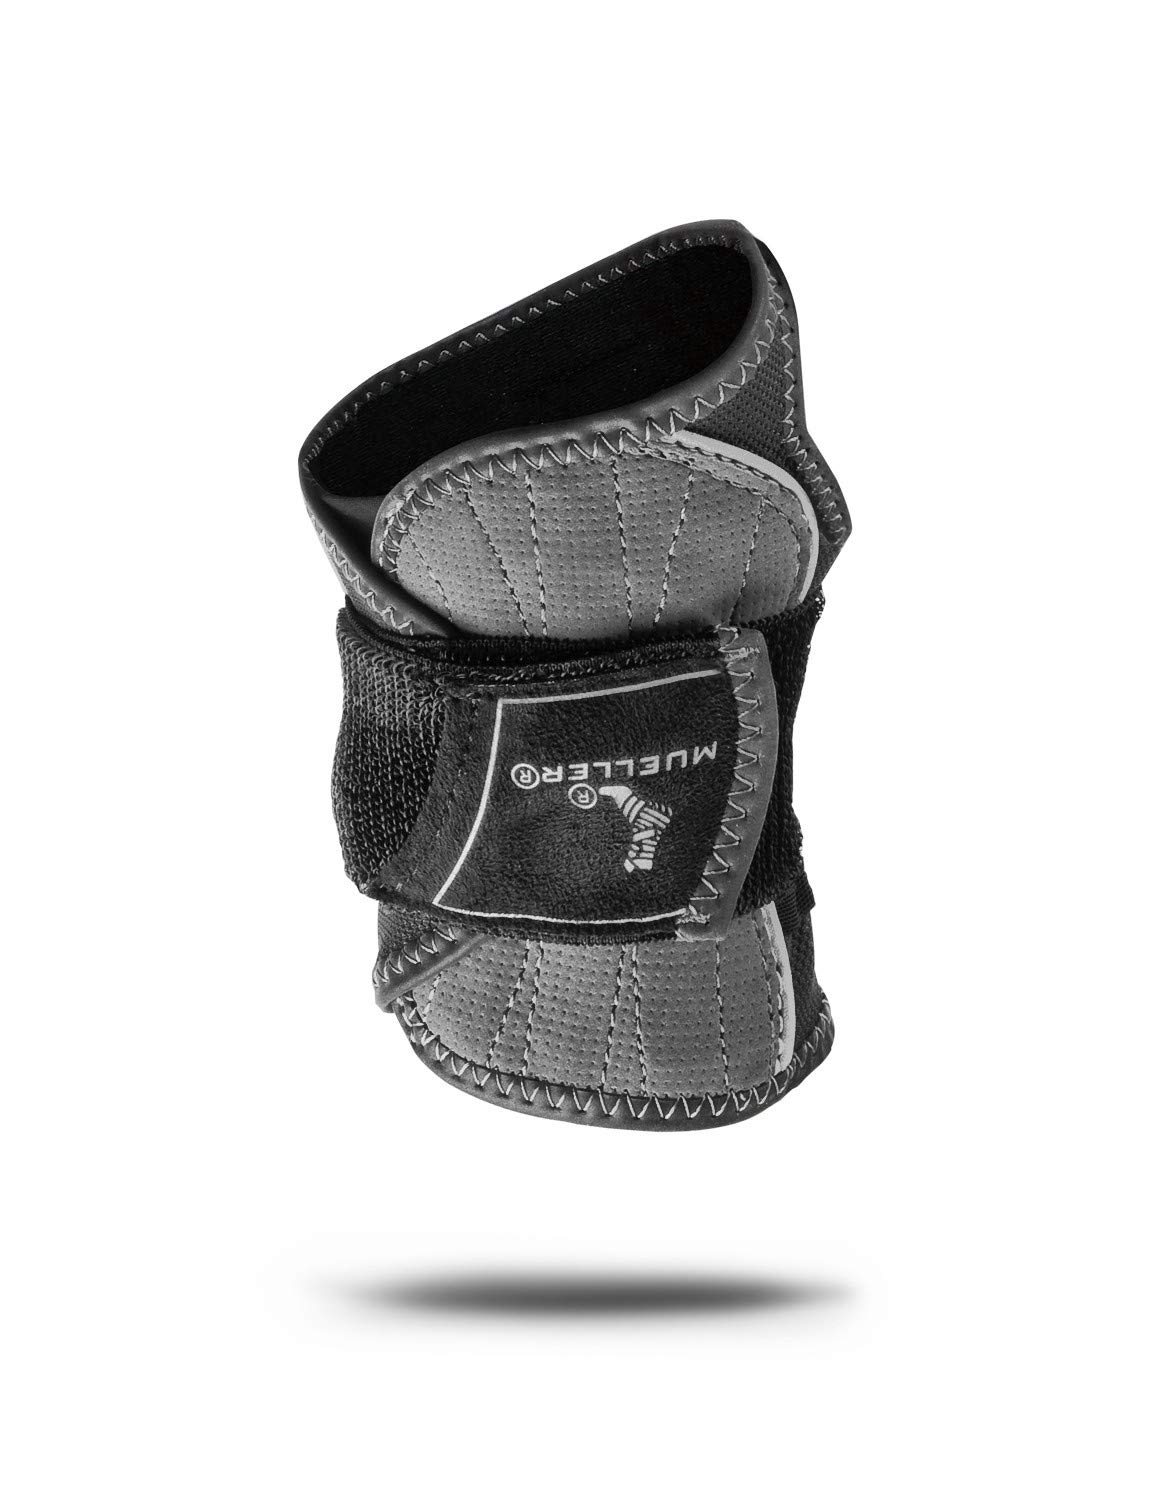 MUELLER Sports Medicine HG80 Premium Wrist Brace, Small/Medium, 0.28 Pound, Black (59637)